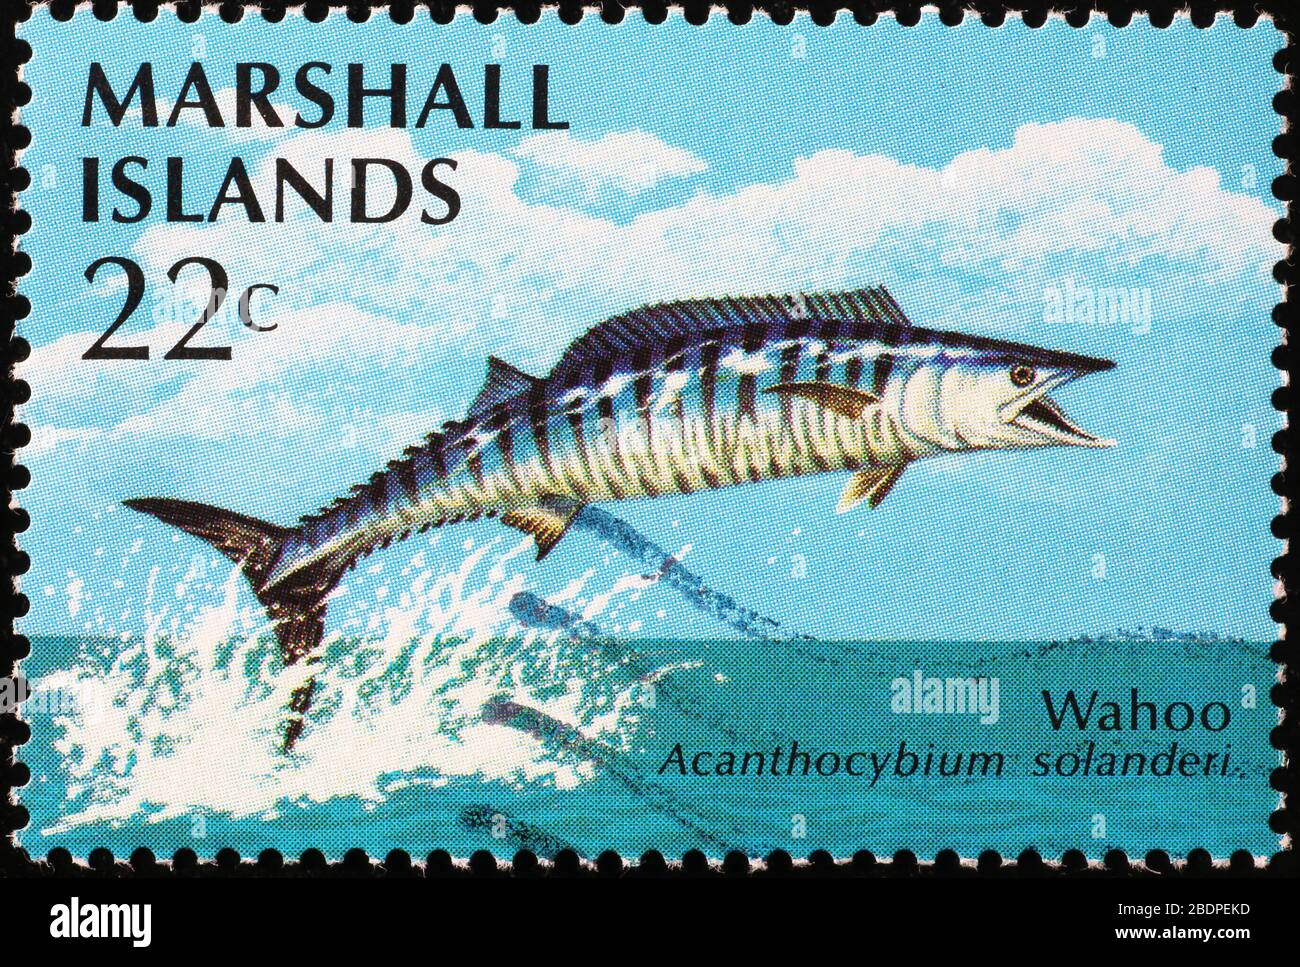 Wahoo on postage stamp of Marshall Islands Stock Photo